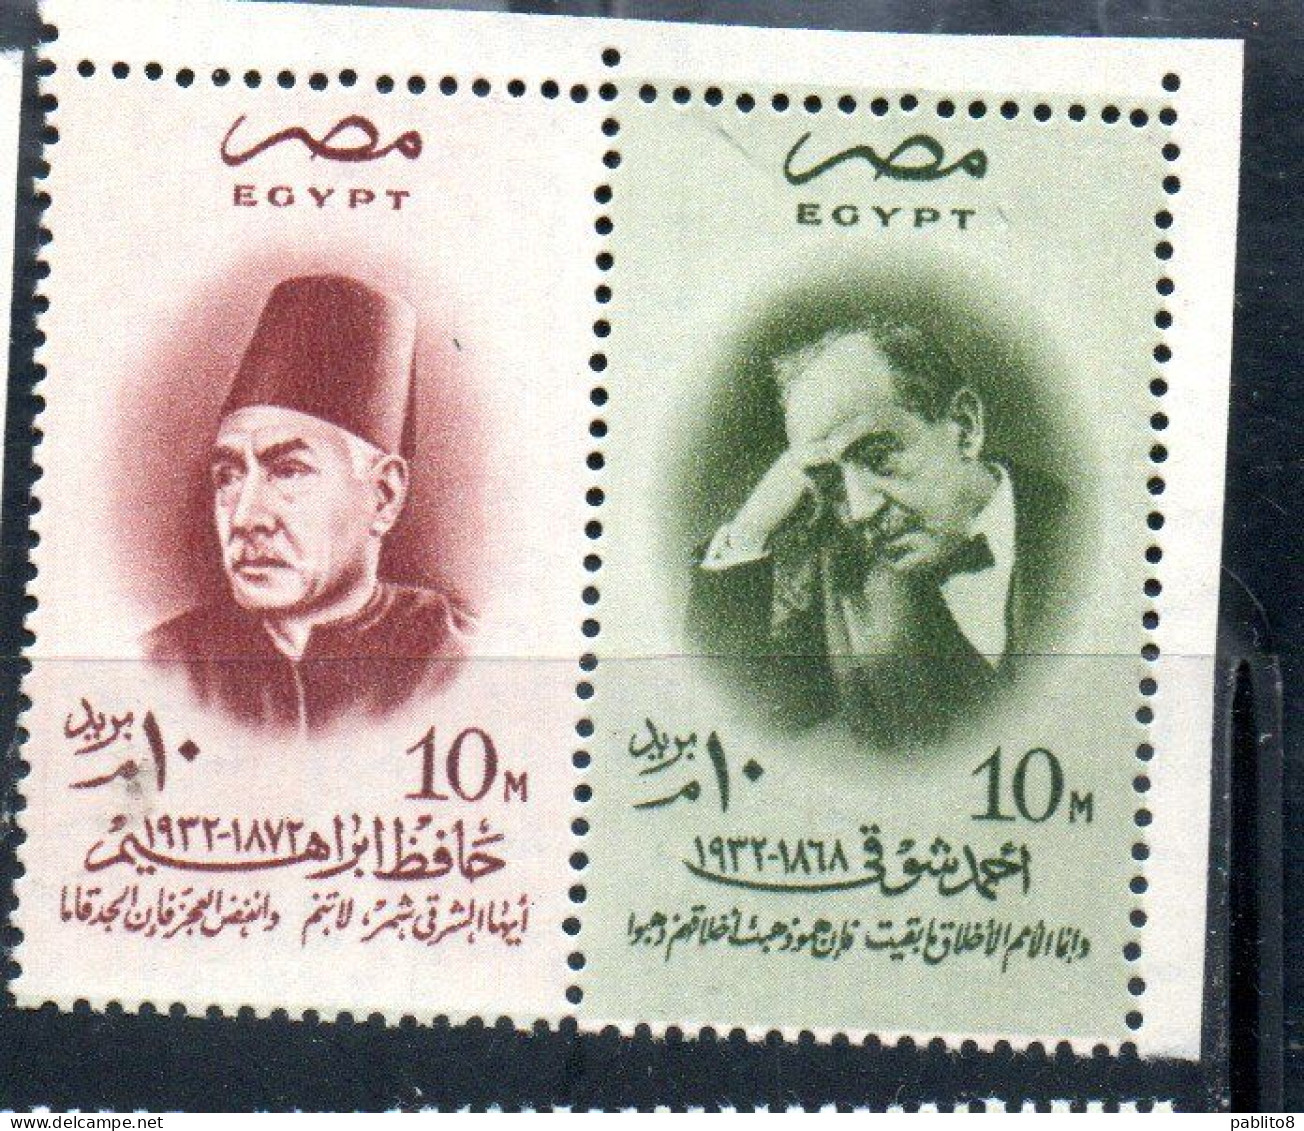 UAR EGYPT EGITTO 1957 HAFEZ IBRAHIM AND AHMED SHAWKY POETS MNH - Nuovi